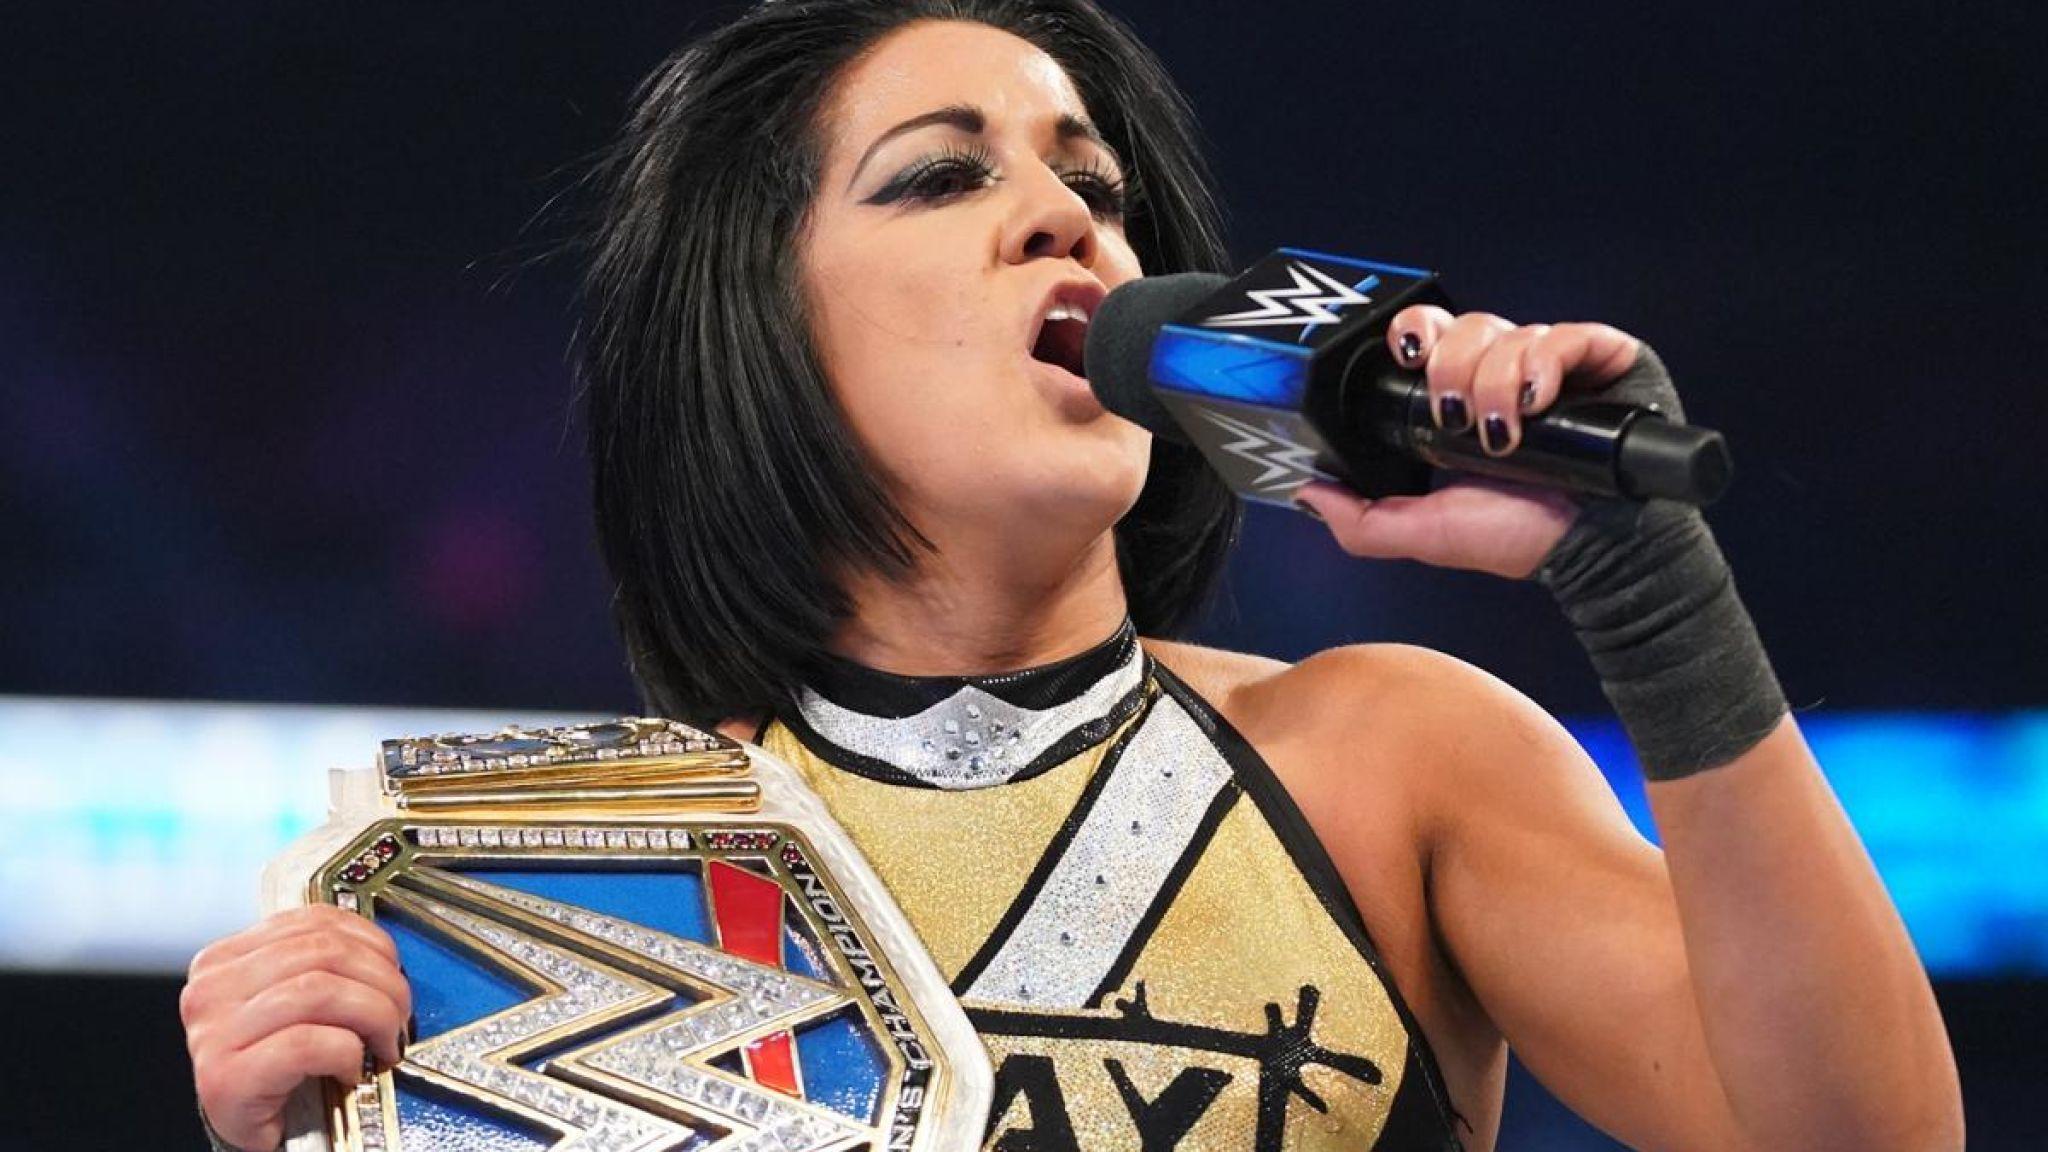 Watch WWE star Bayley's new entrance after her shock heel turn left fans in tears